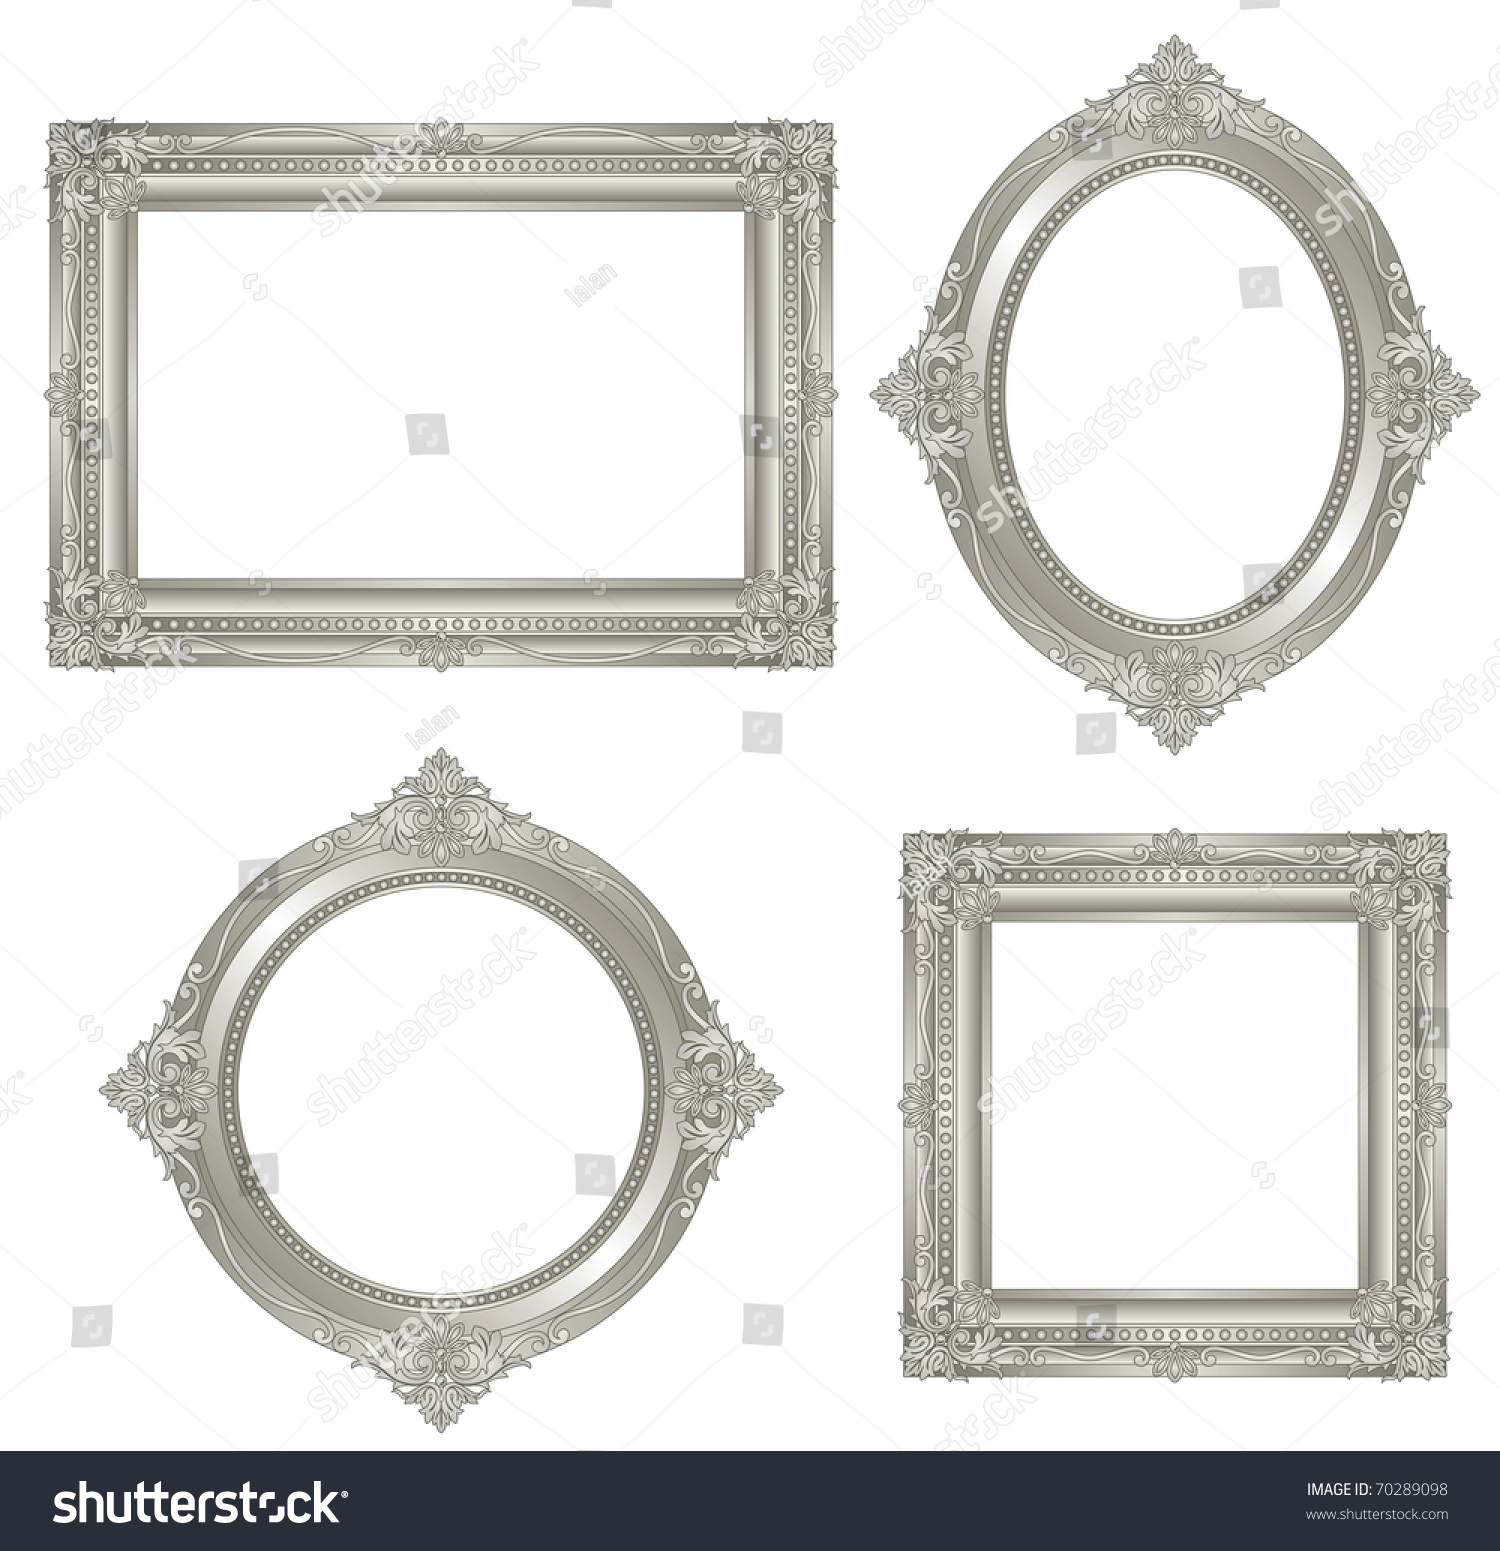 Silver Frame. Vector. - 70289098 : Shutterstock